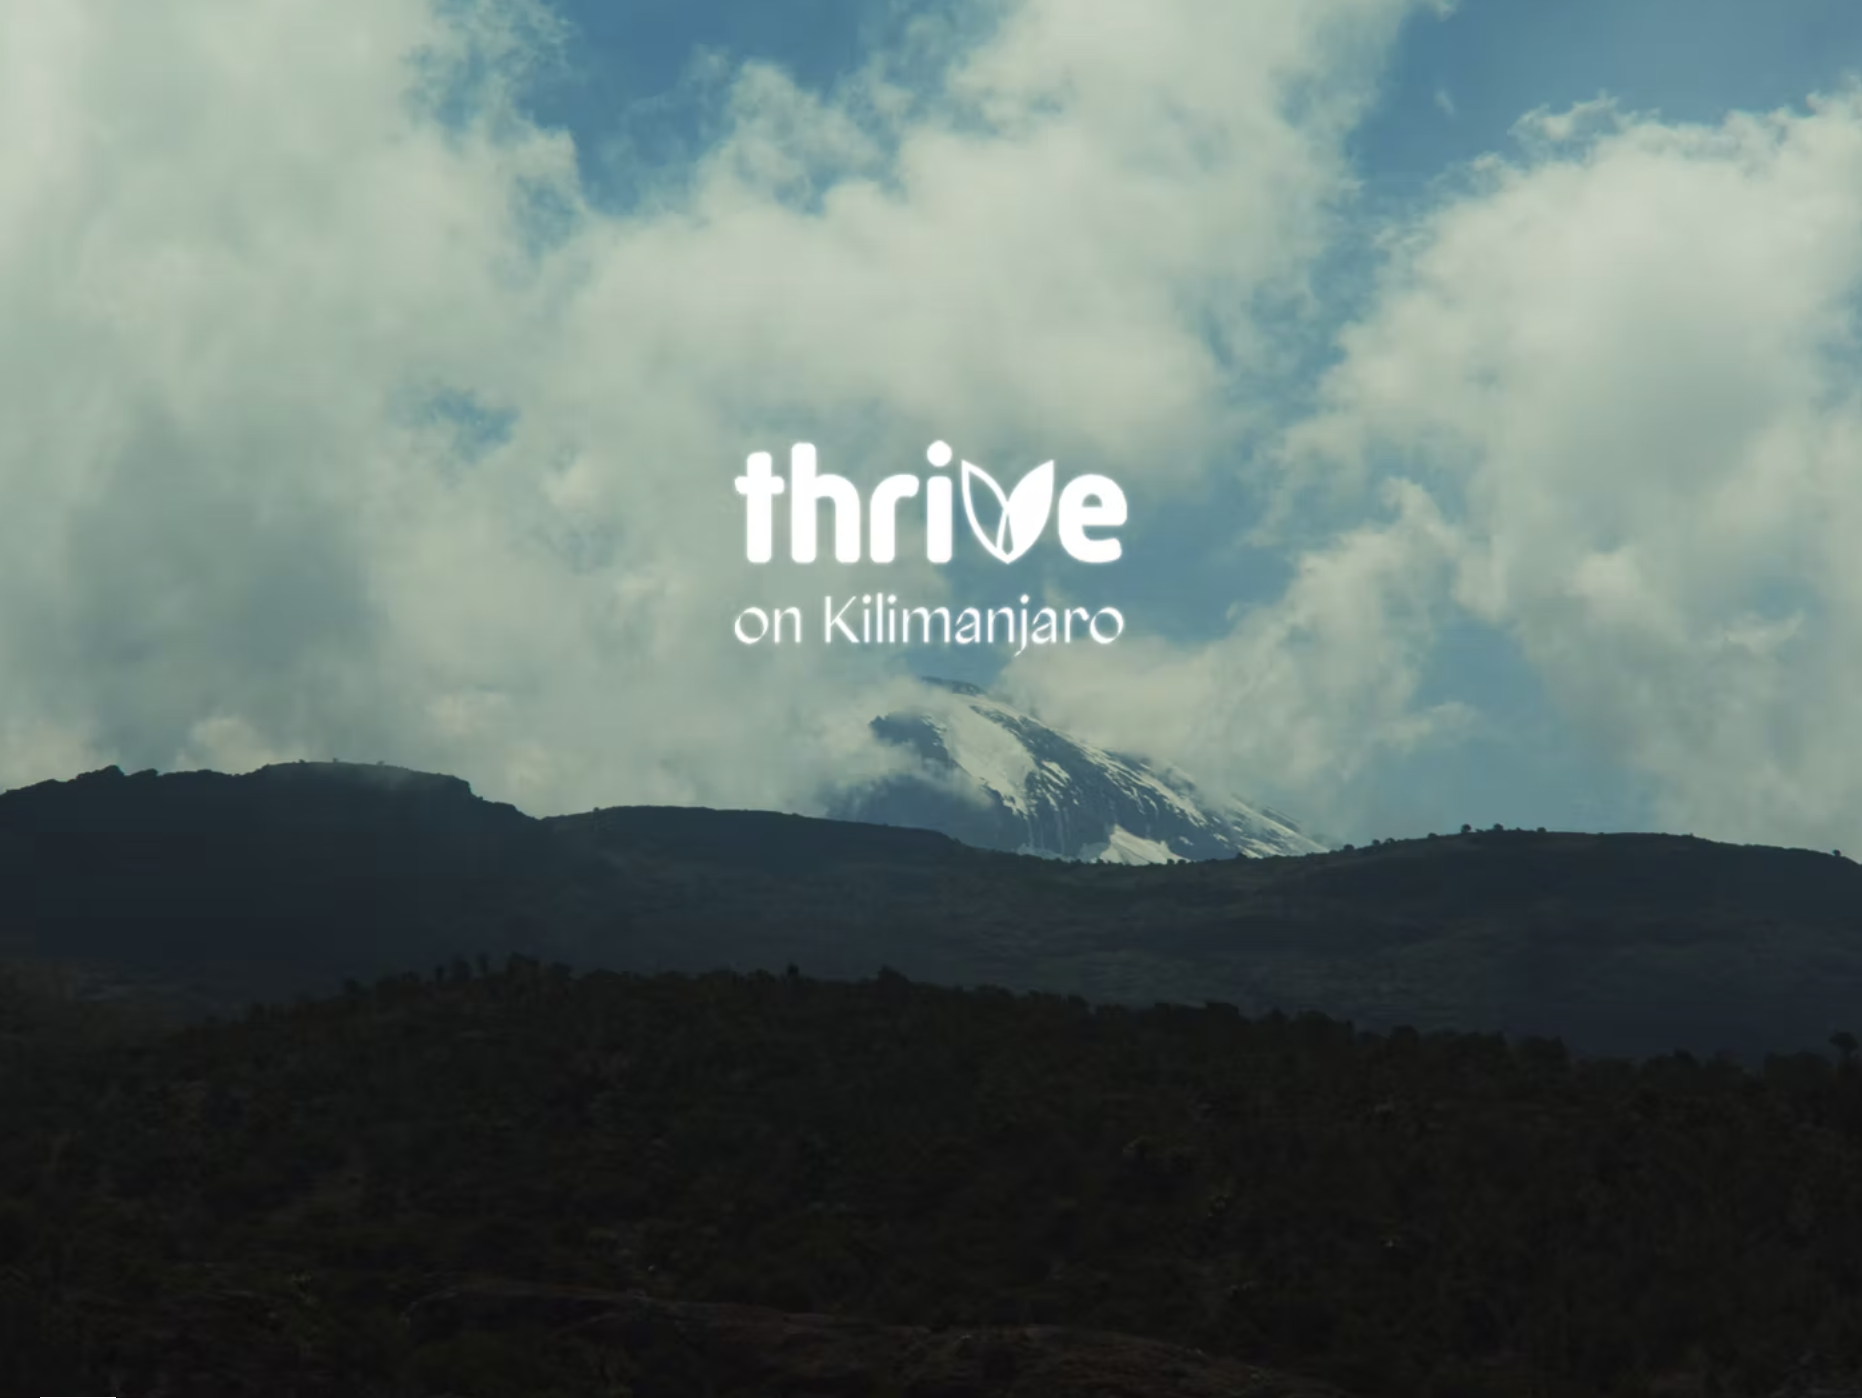 Thrive on Kilimanjaro Film Premiere - May 11th (Toronto)